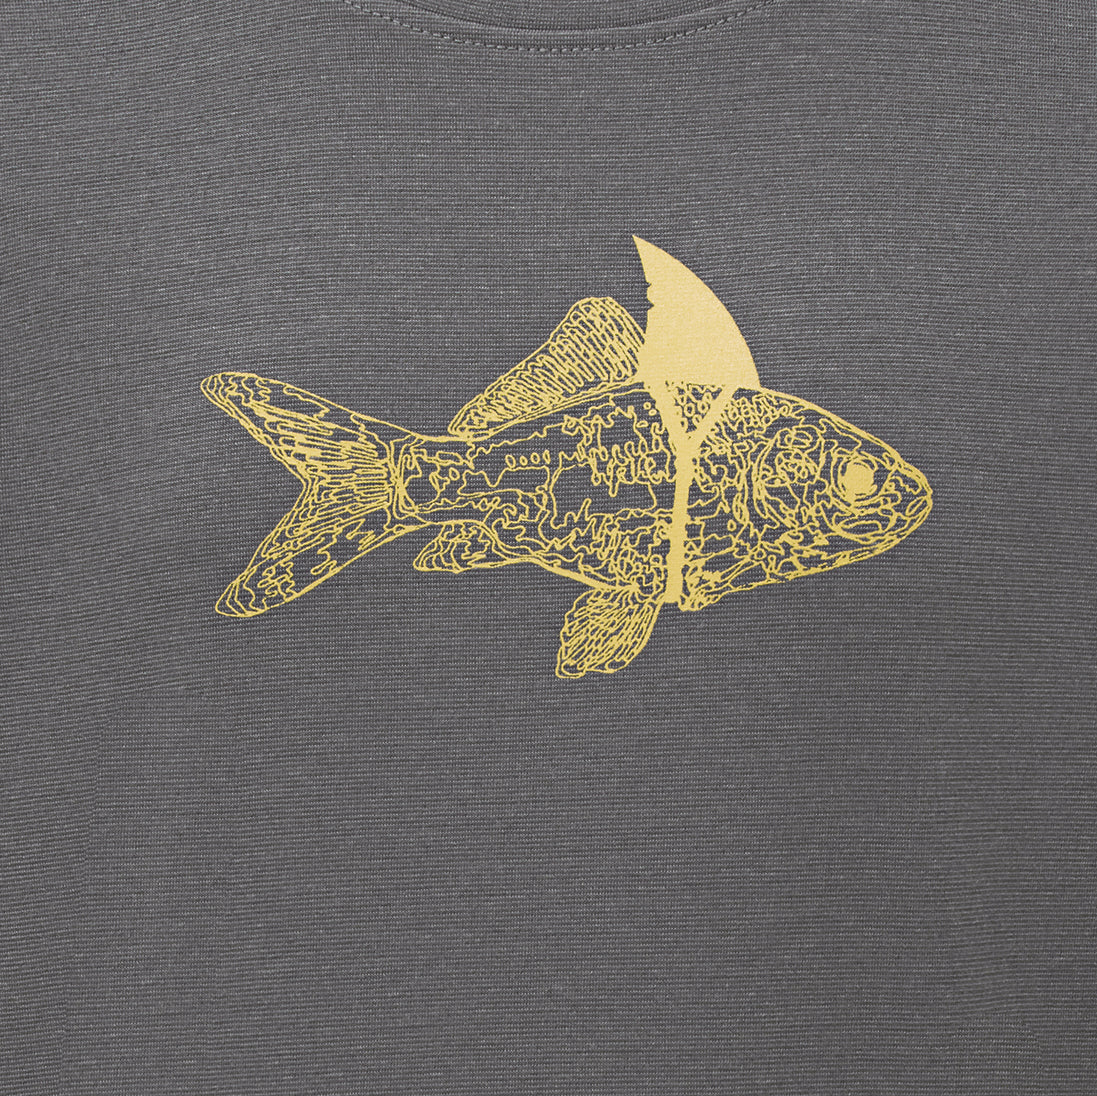 Sprayway Junior Fish Tech T-Shirt (Asphalt)